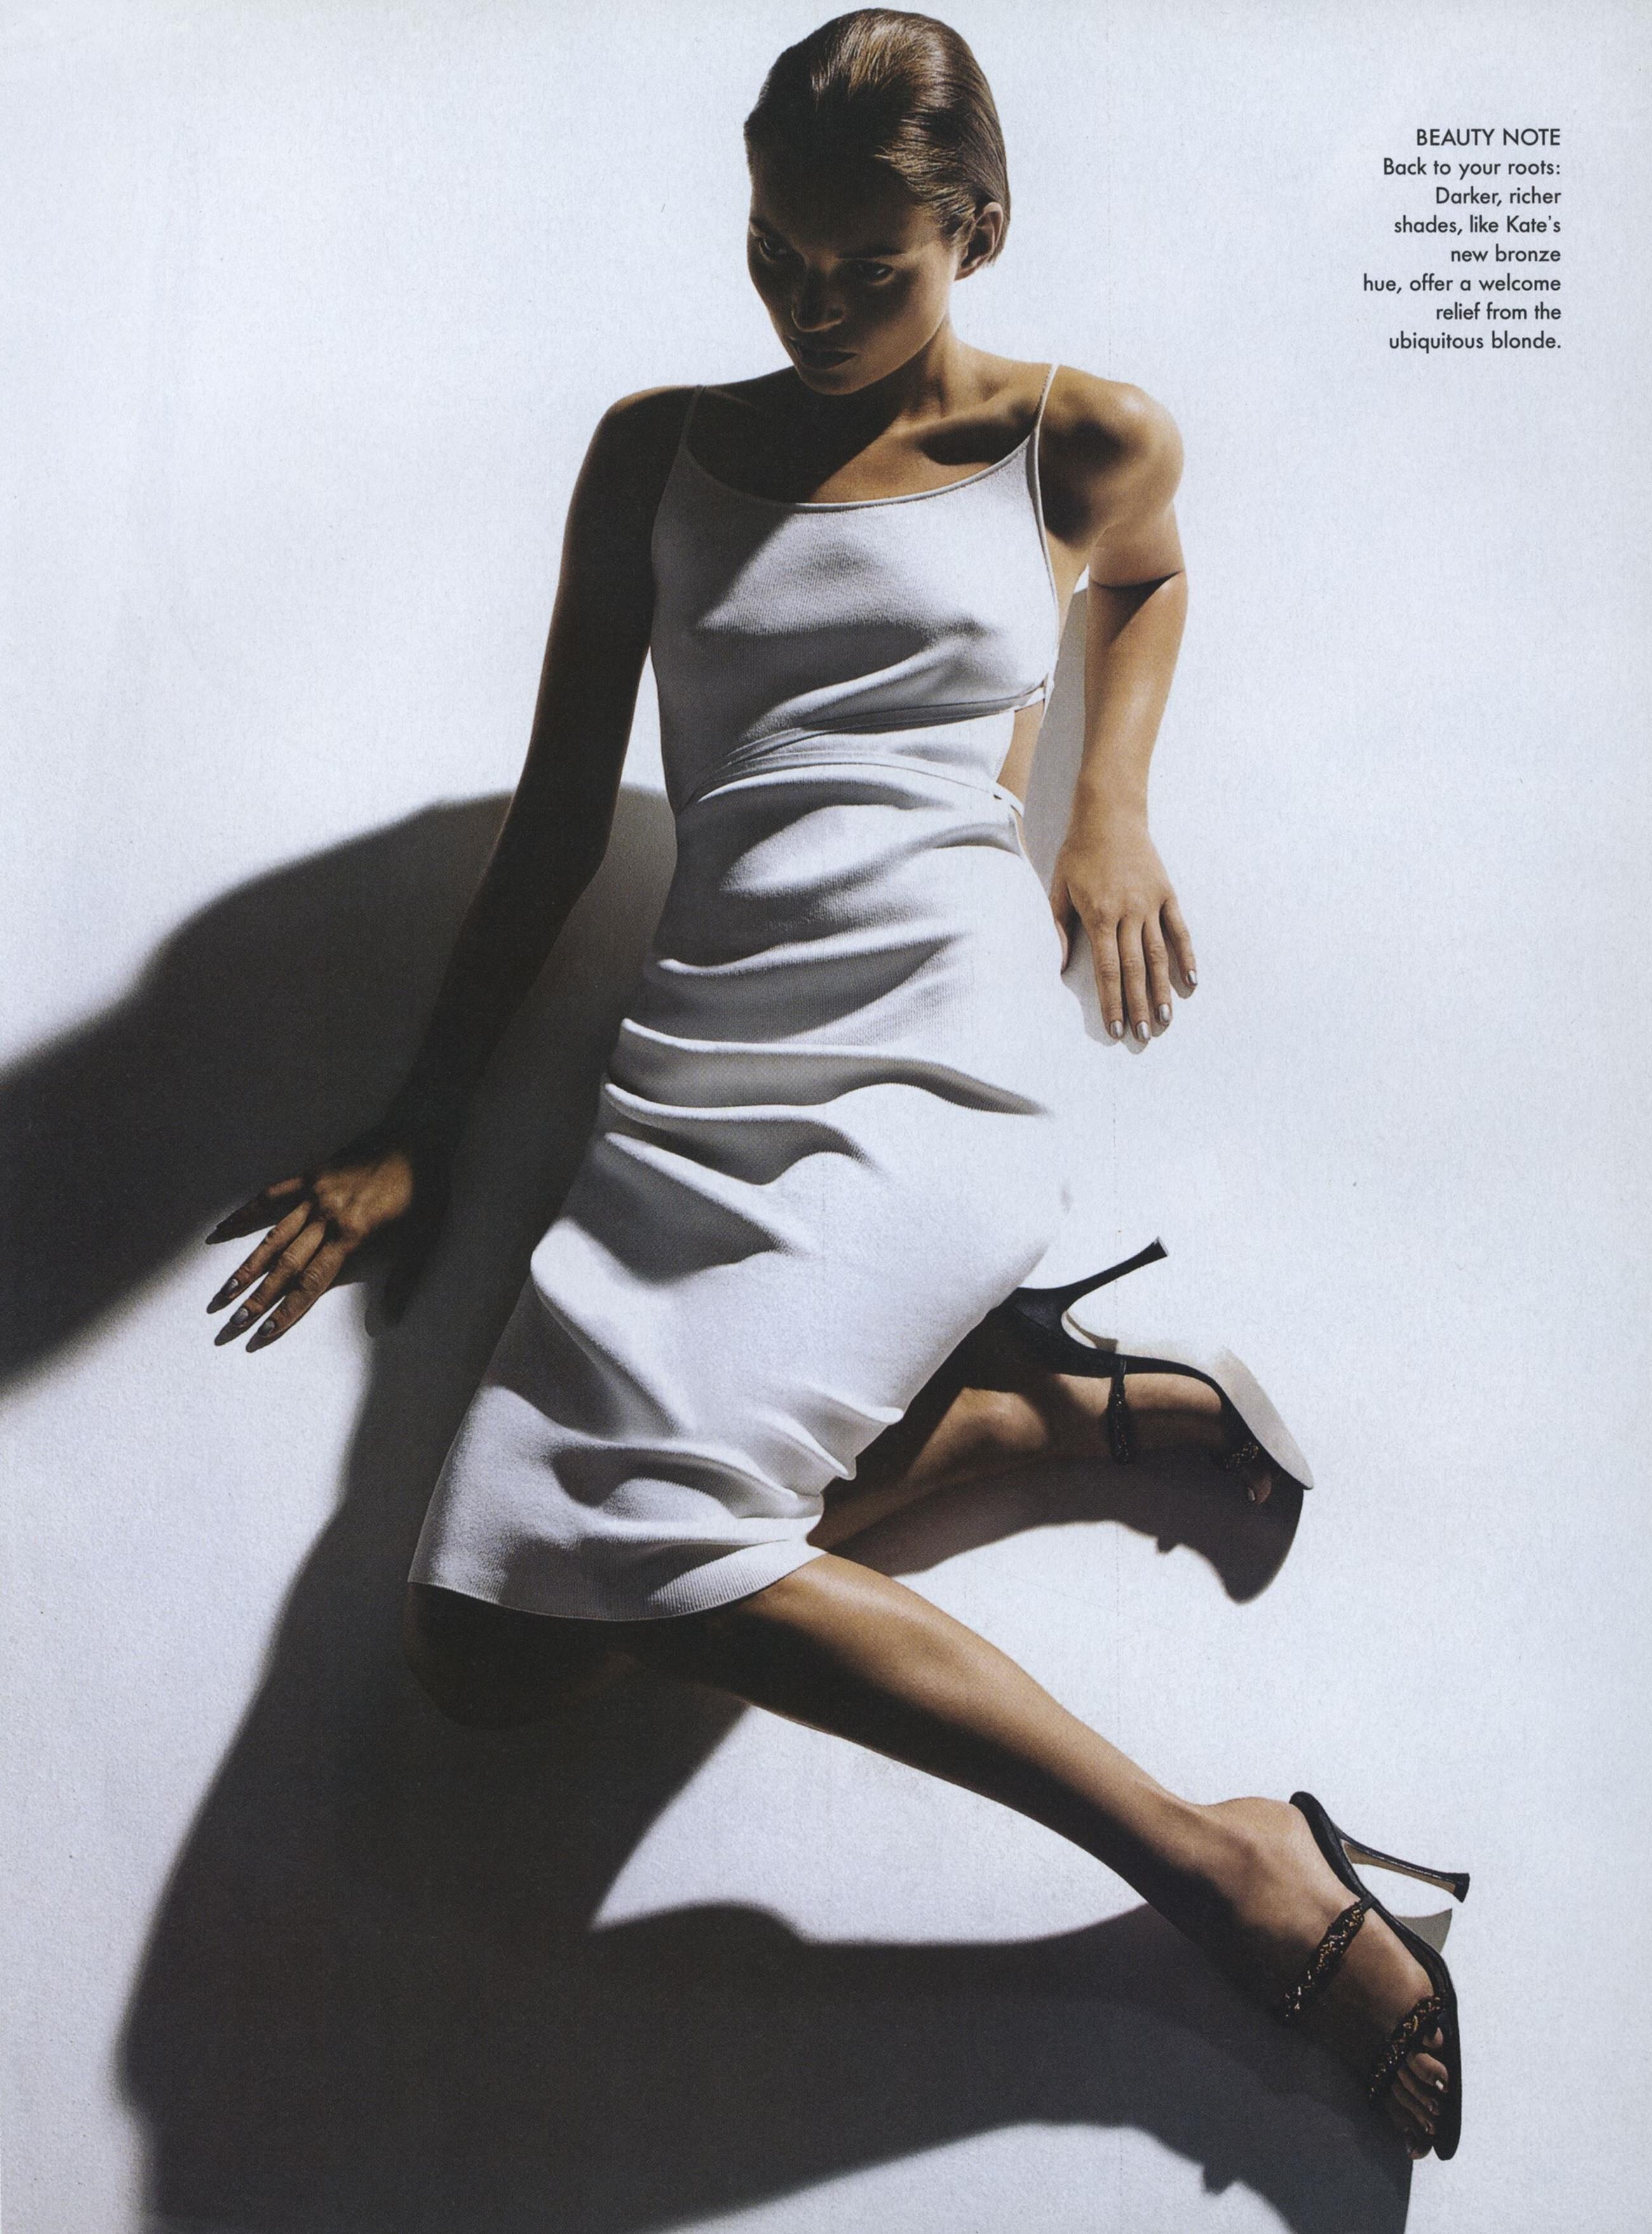 US Vogue November 1998. 